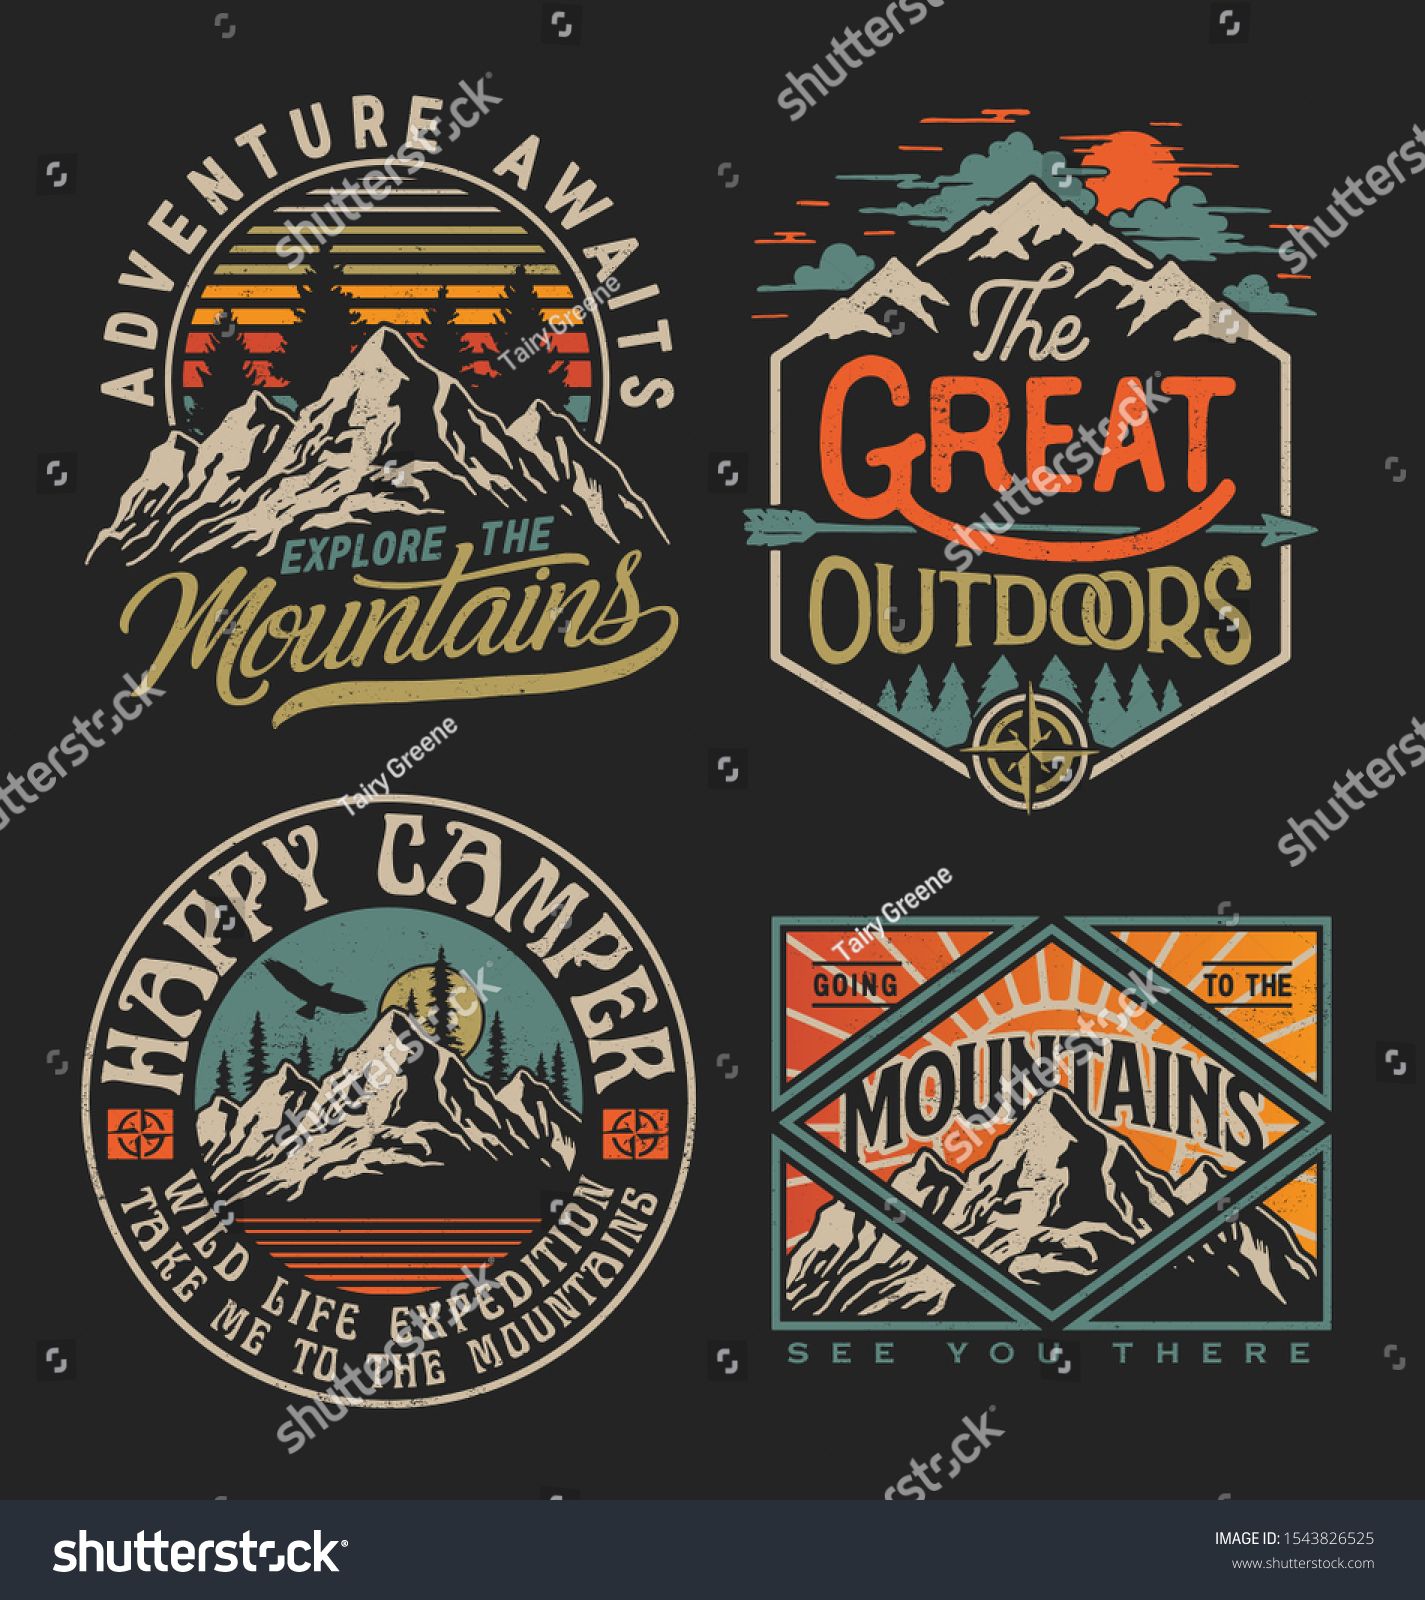 Collection of vintage explorer, wilderness, adventure, camping emblem graphics  #1543826525